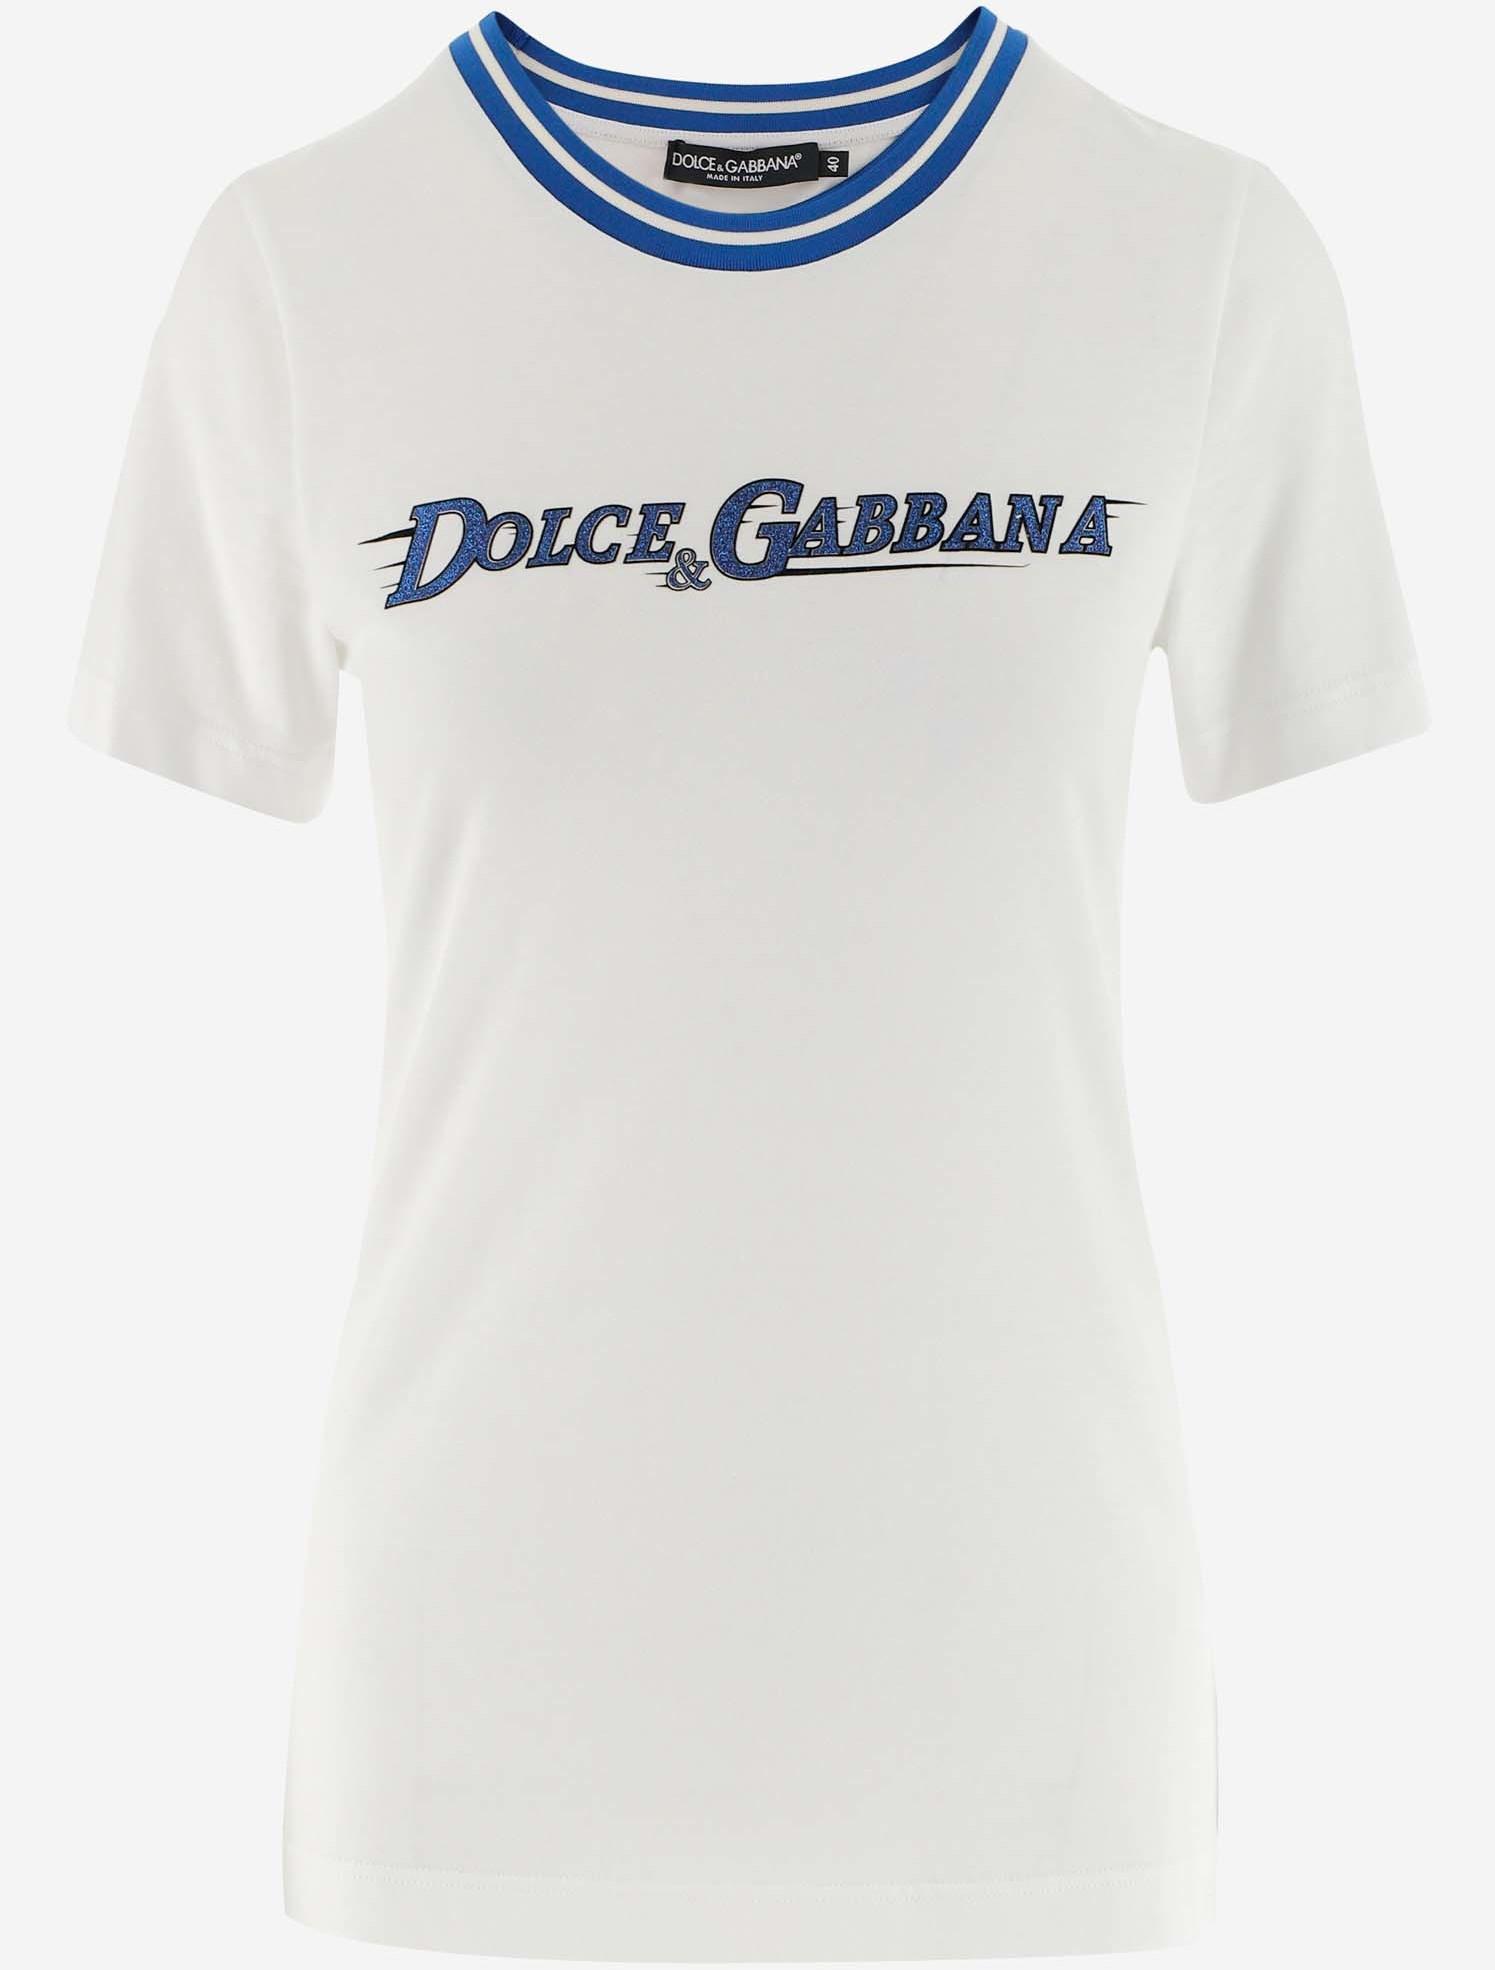 dolce and gabbana t shirts women's